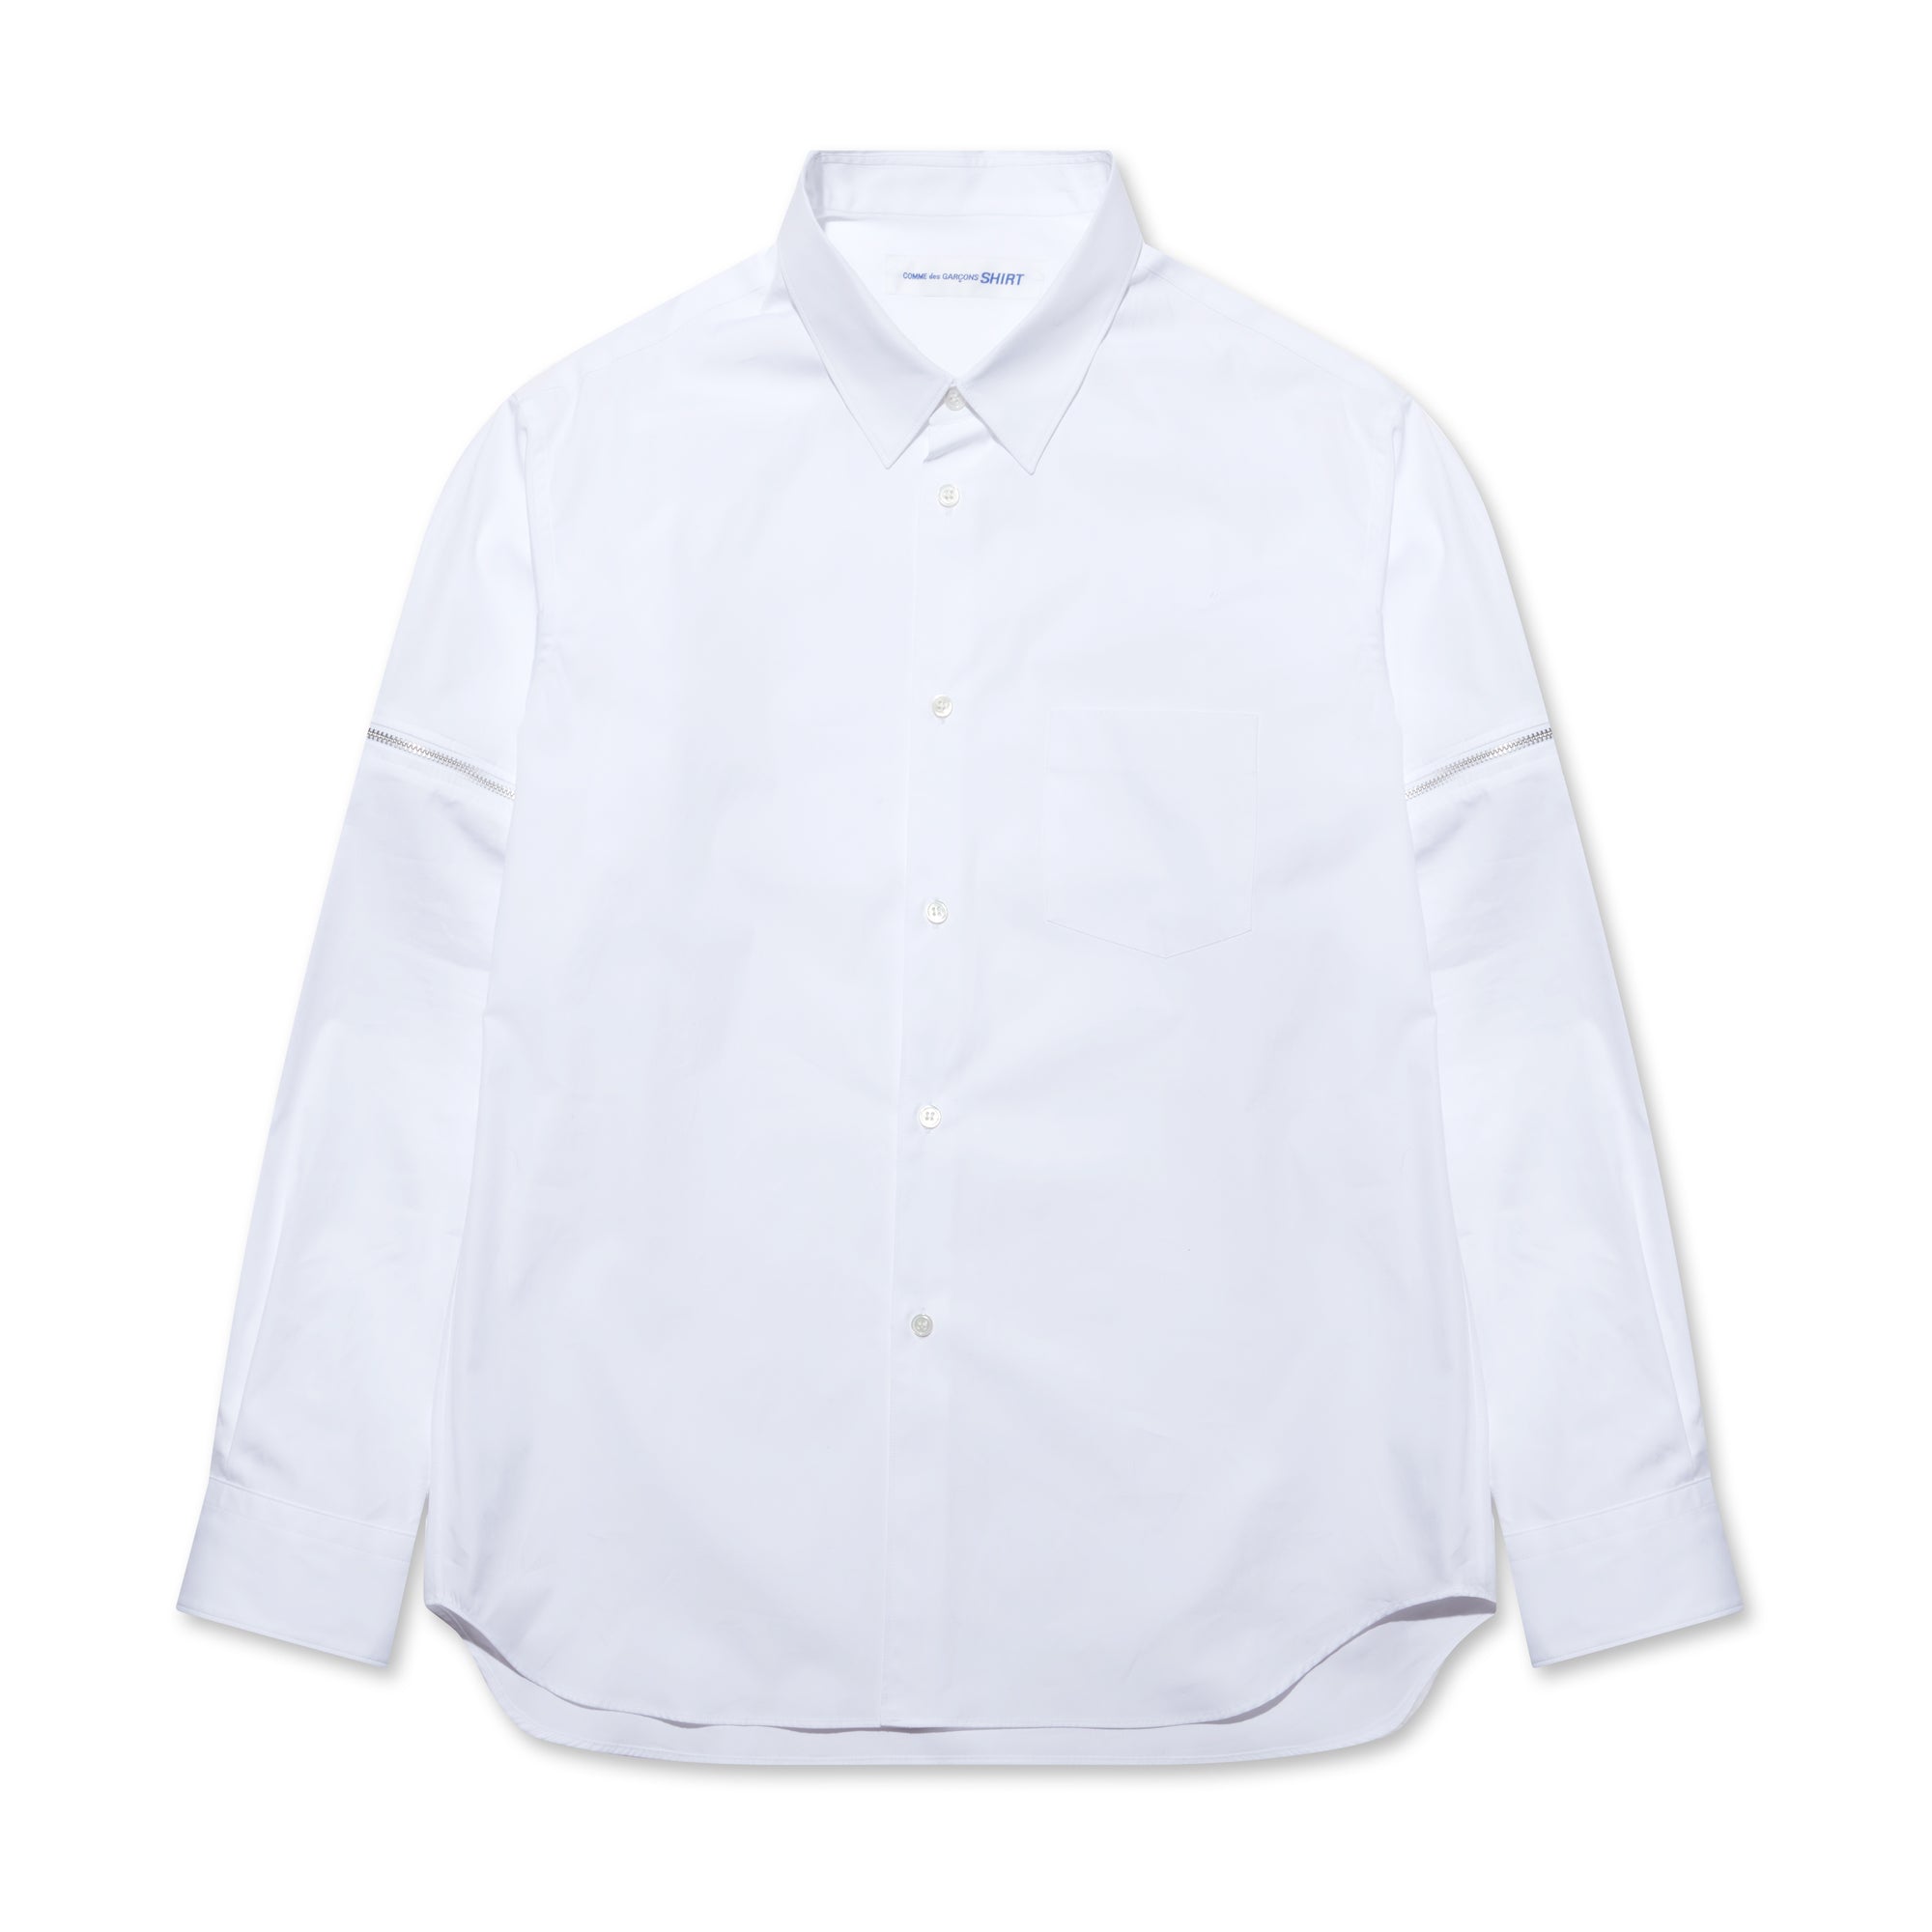 CDG Shirt - Men's Zip Off Sleeve Shirt - (White) view 5